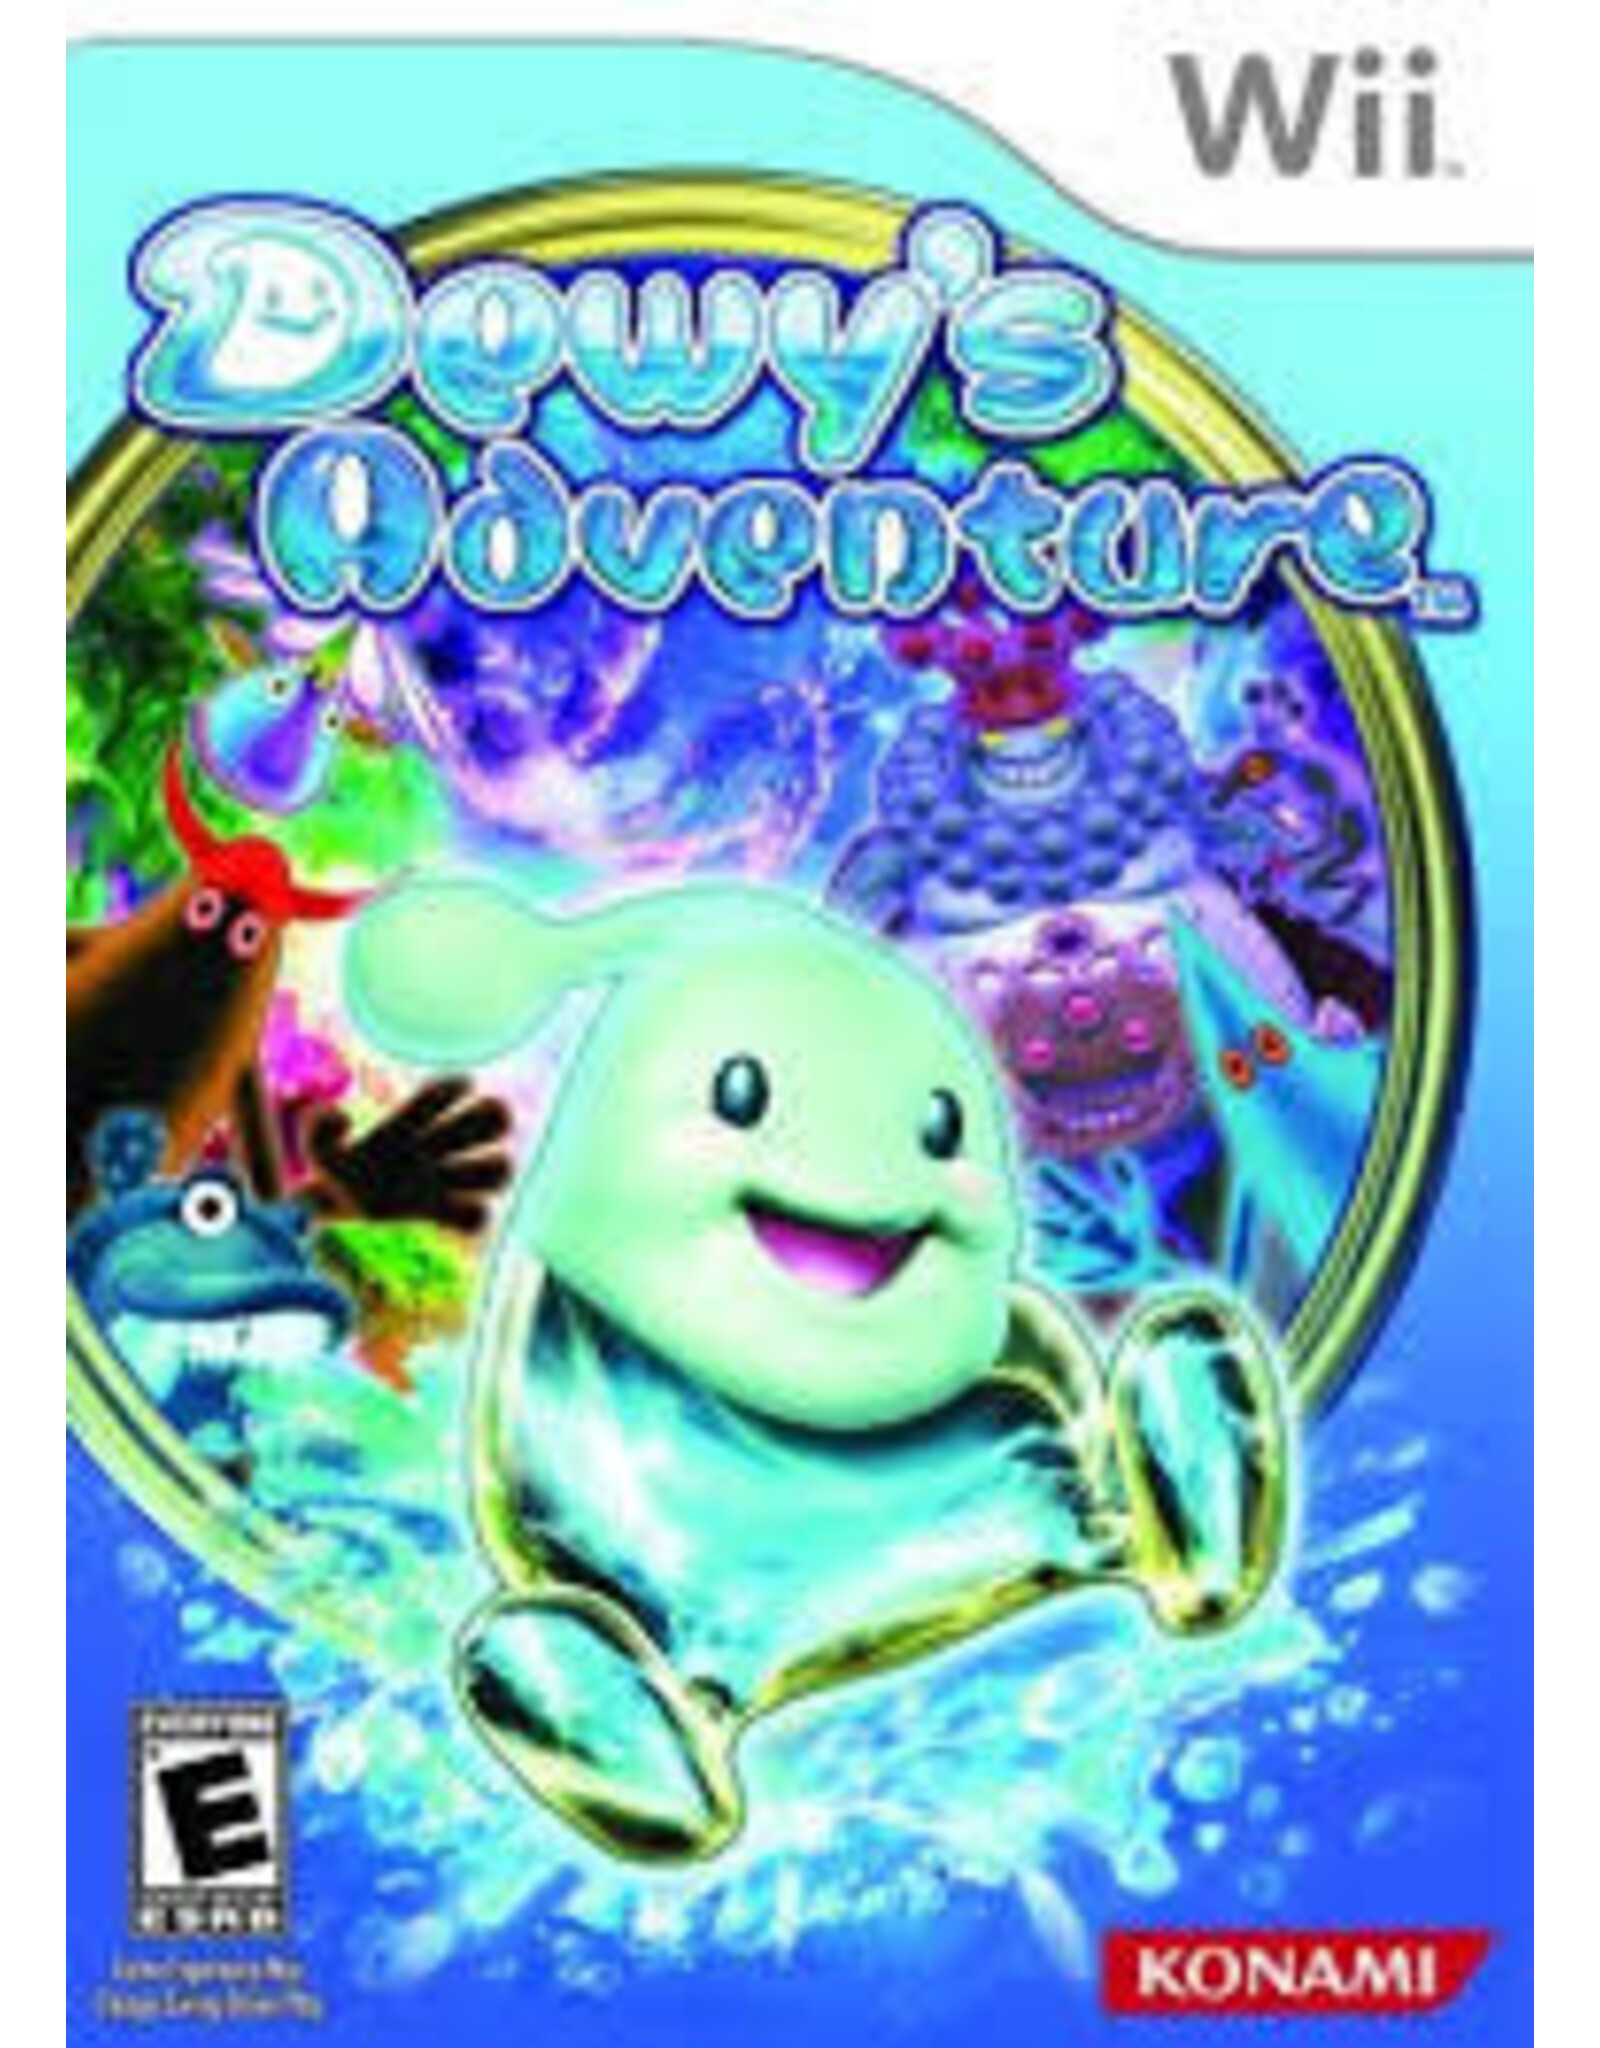 Wii Dewy's Adventure (CiB)